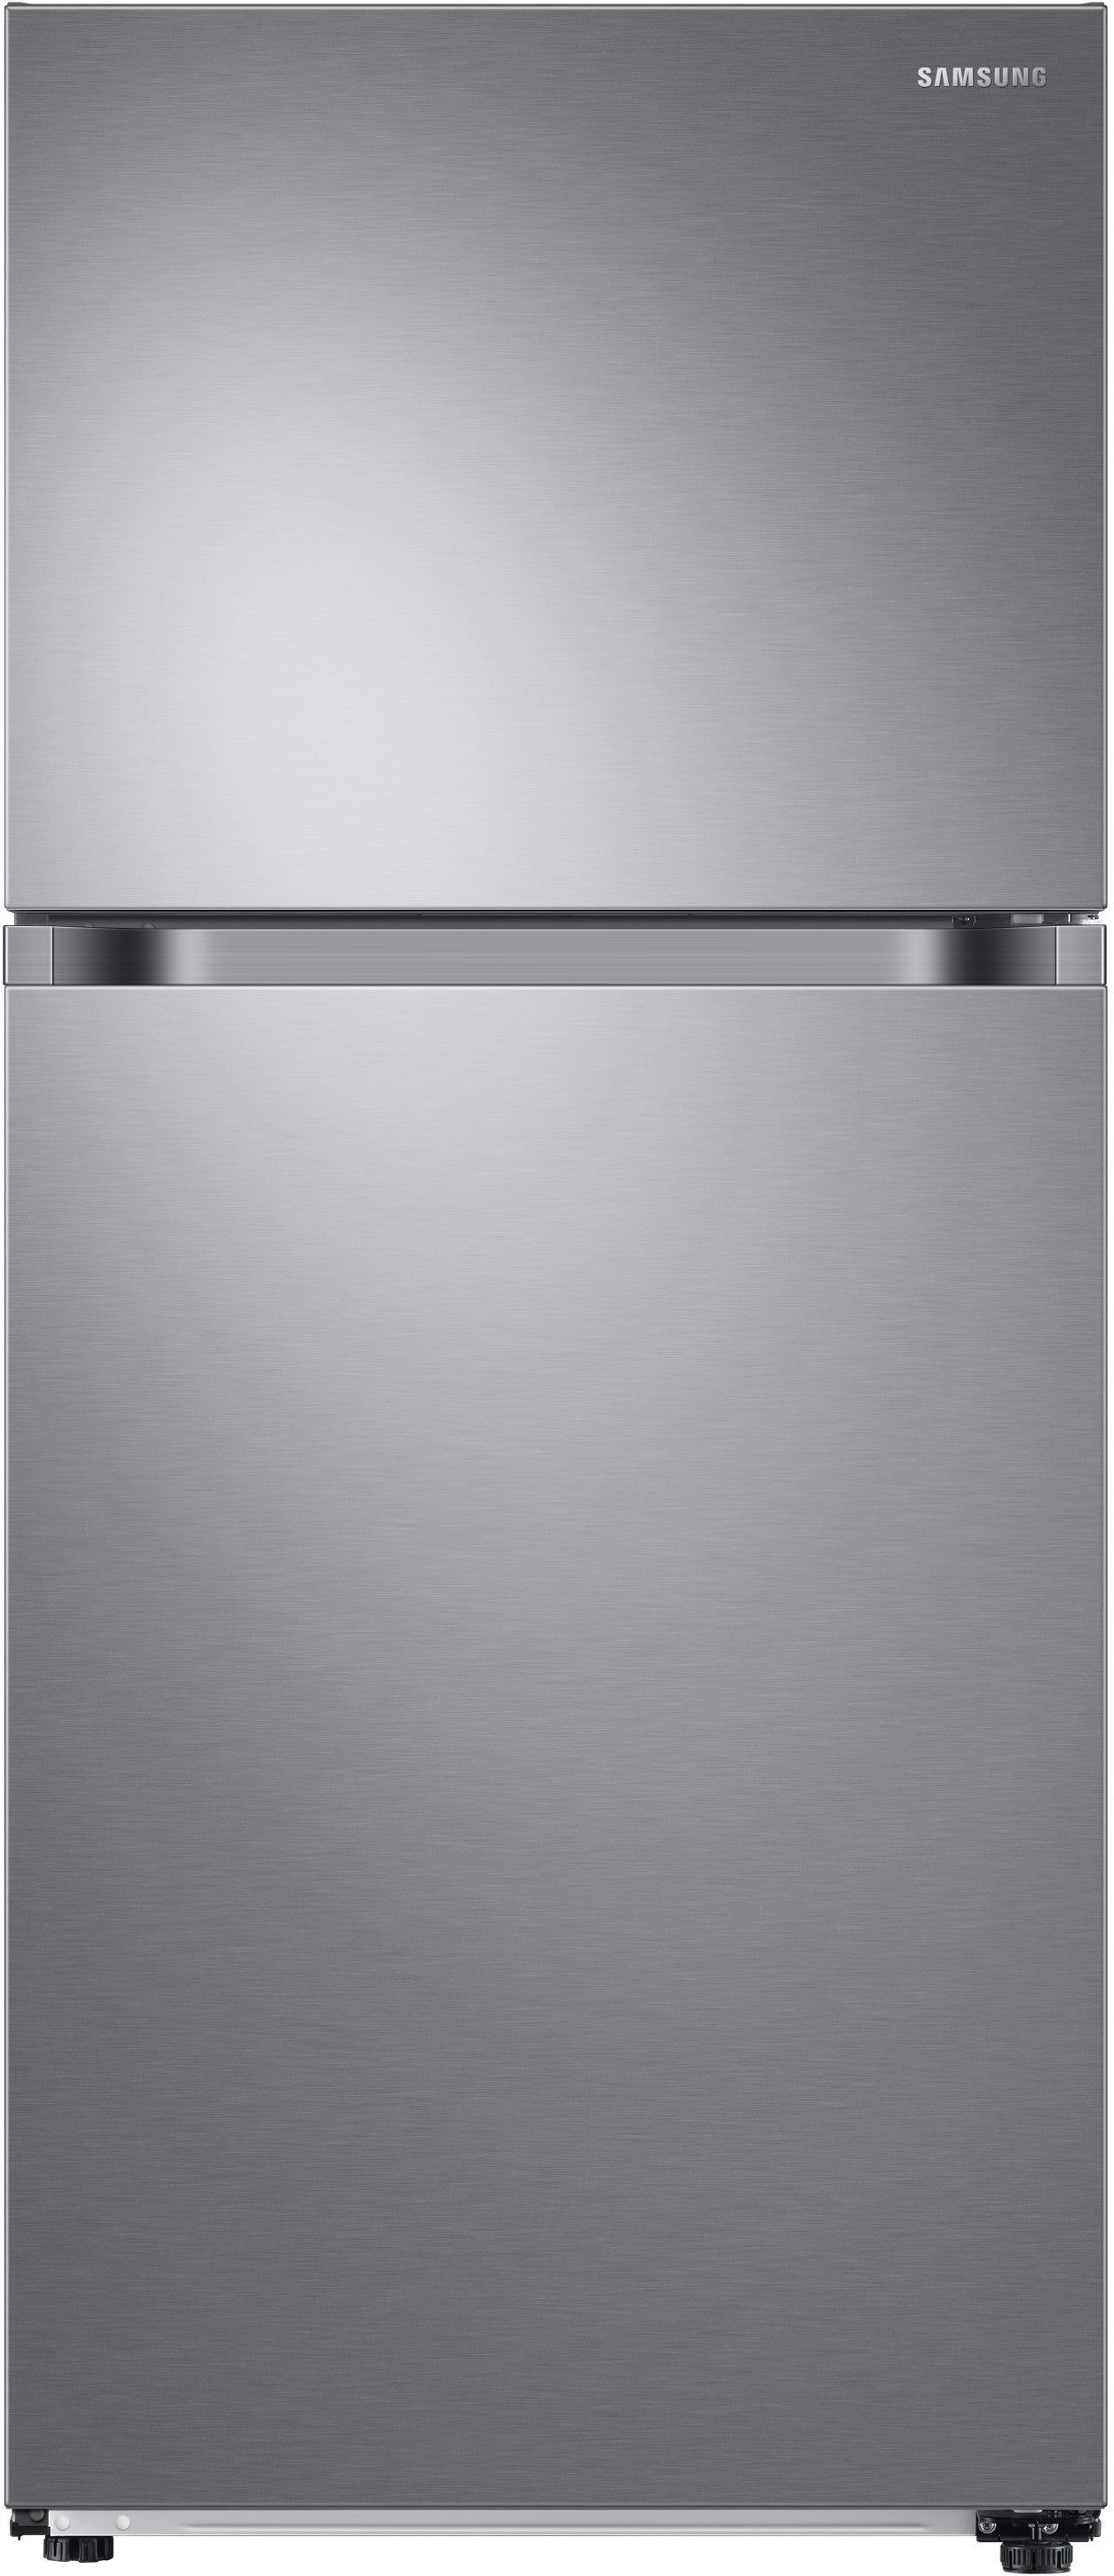 Samsung RT18M6215SR/AA 18 Cu. Ft. Capacity Top Freezer Refrigerator With Flex zone - Samsung Parts USA